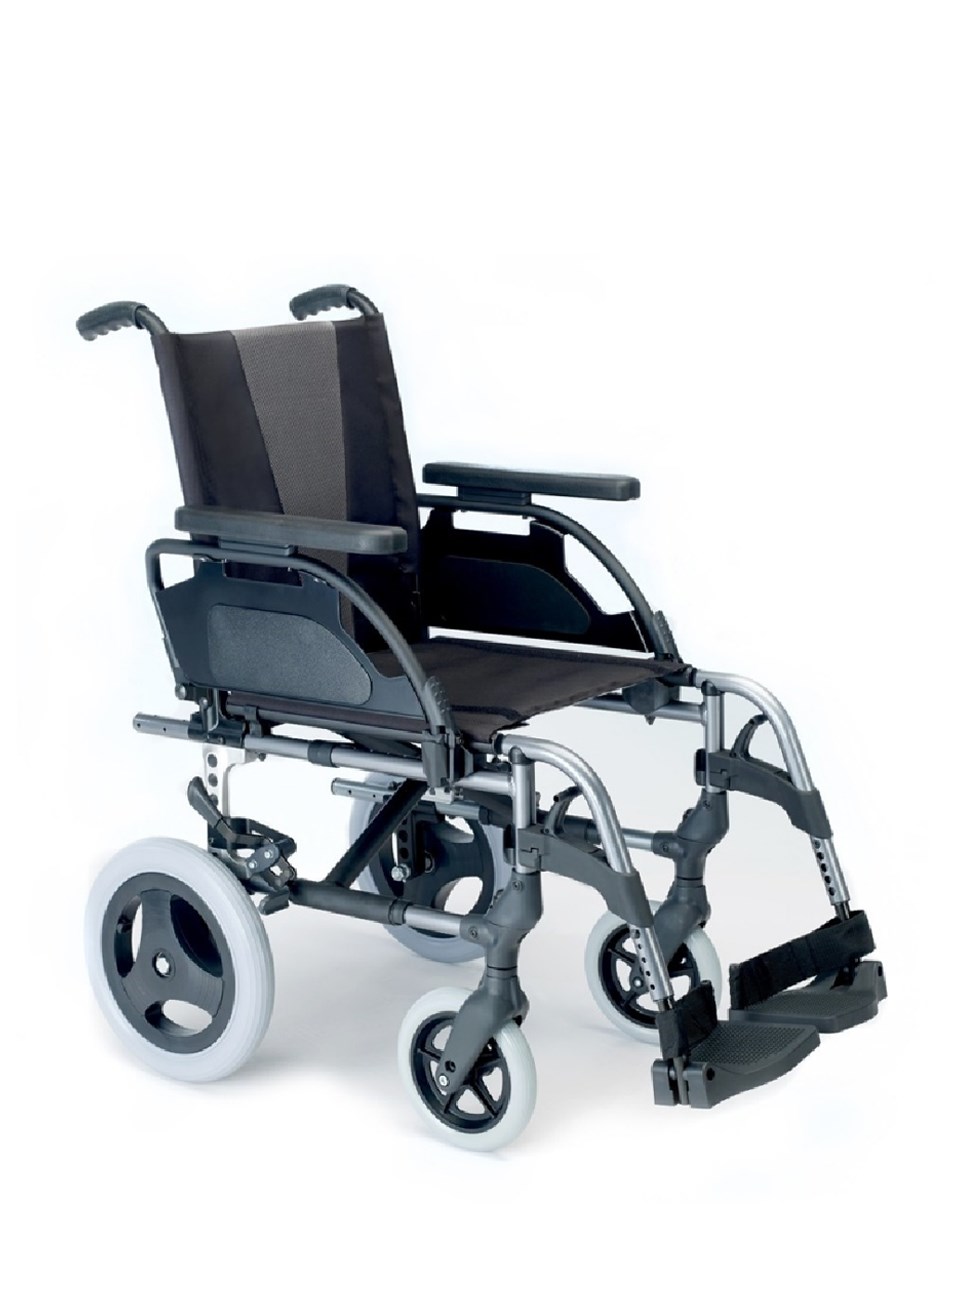 Инвалидное кресло на авито. Кресло-коляска Breezy 710 Style p. Инвалидная коляска h007. Кресло каталка Армед 2500. Кресло коляска ly 710 производитель.